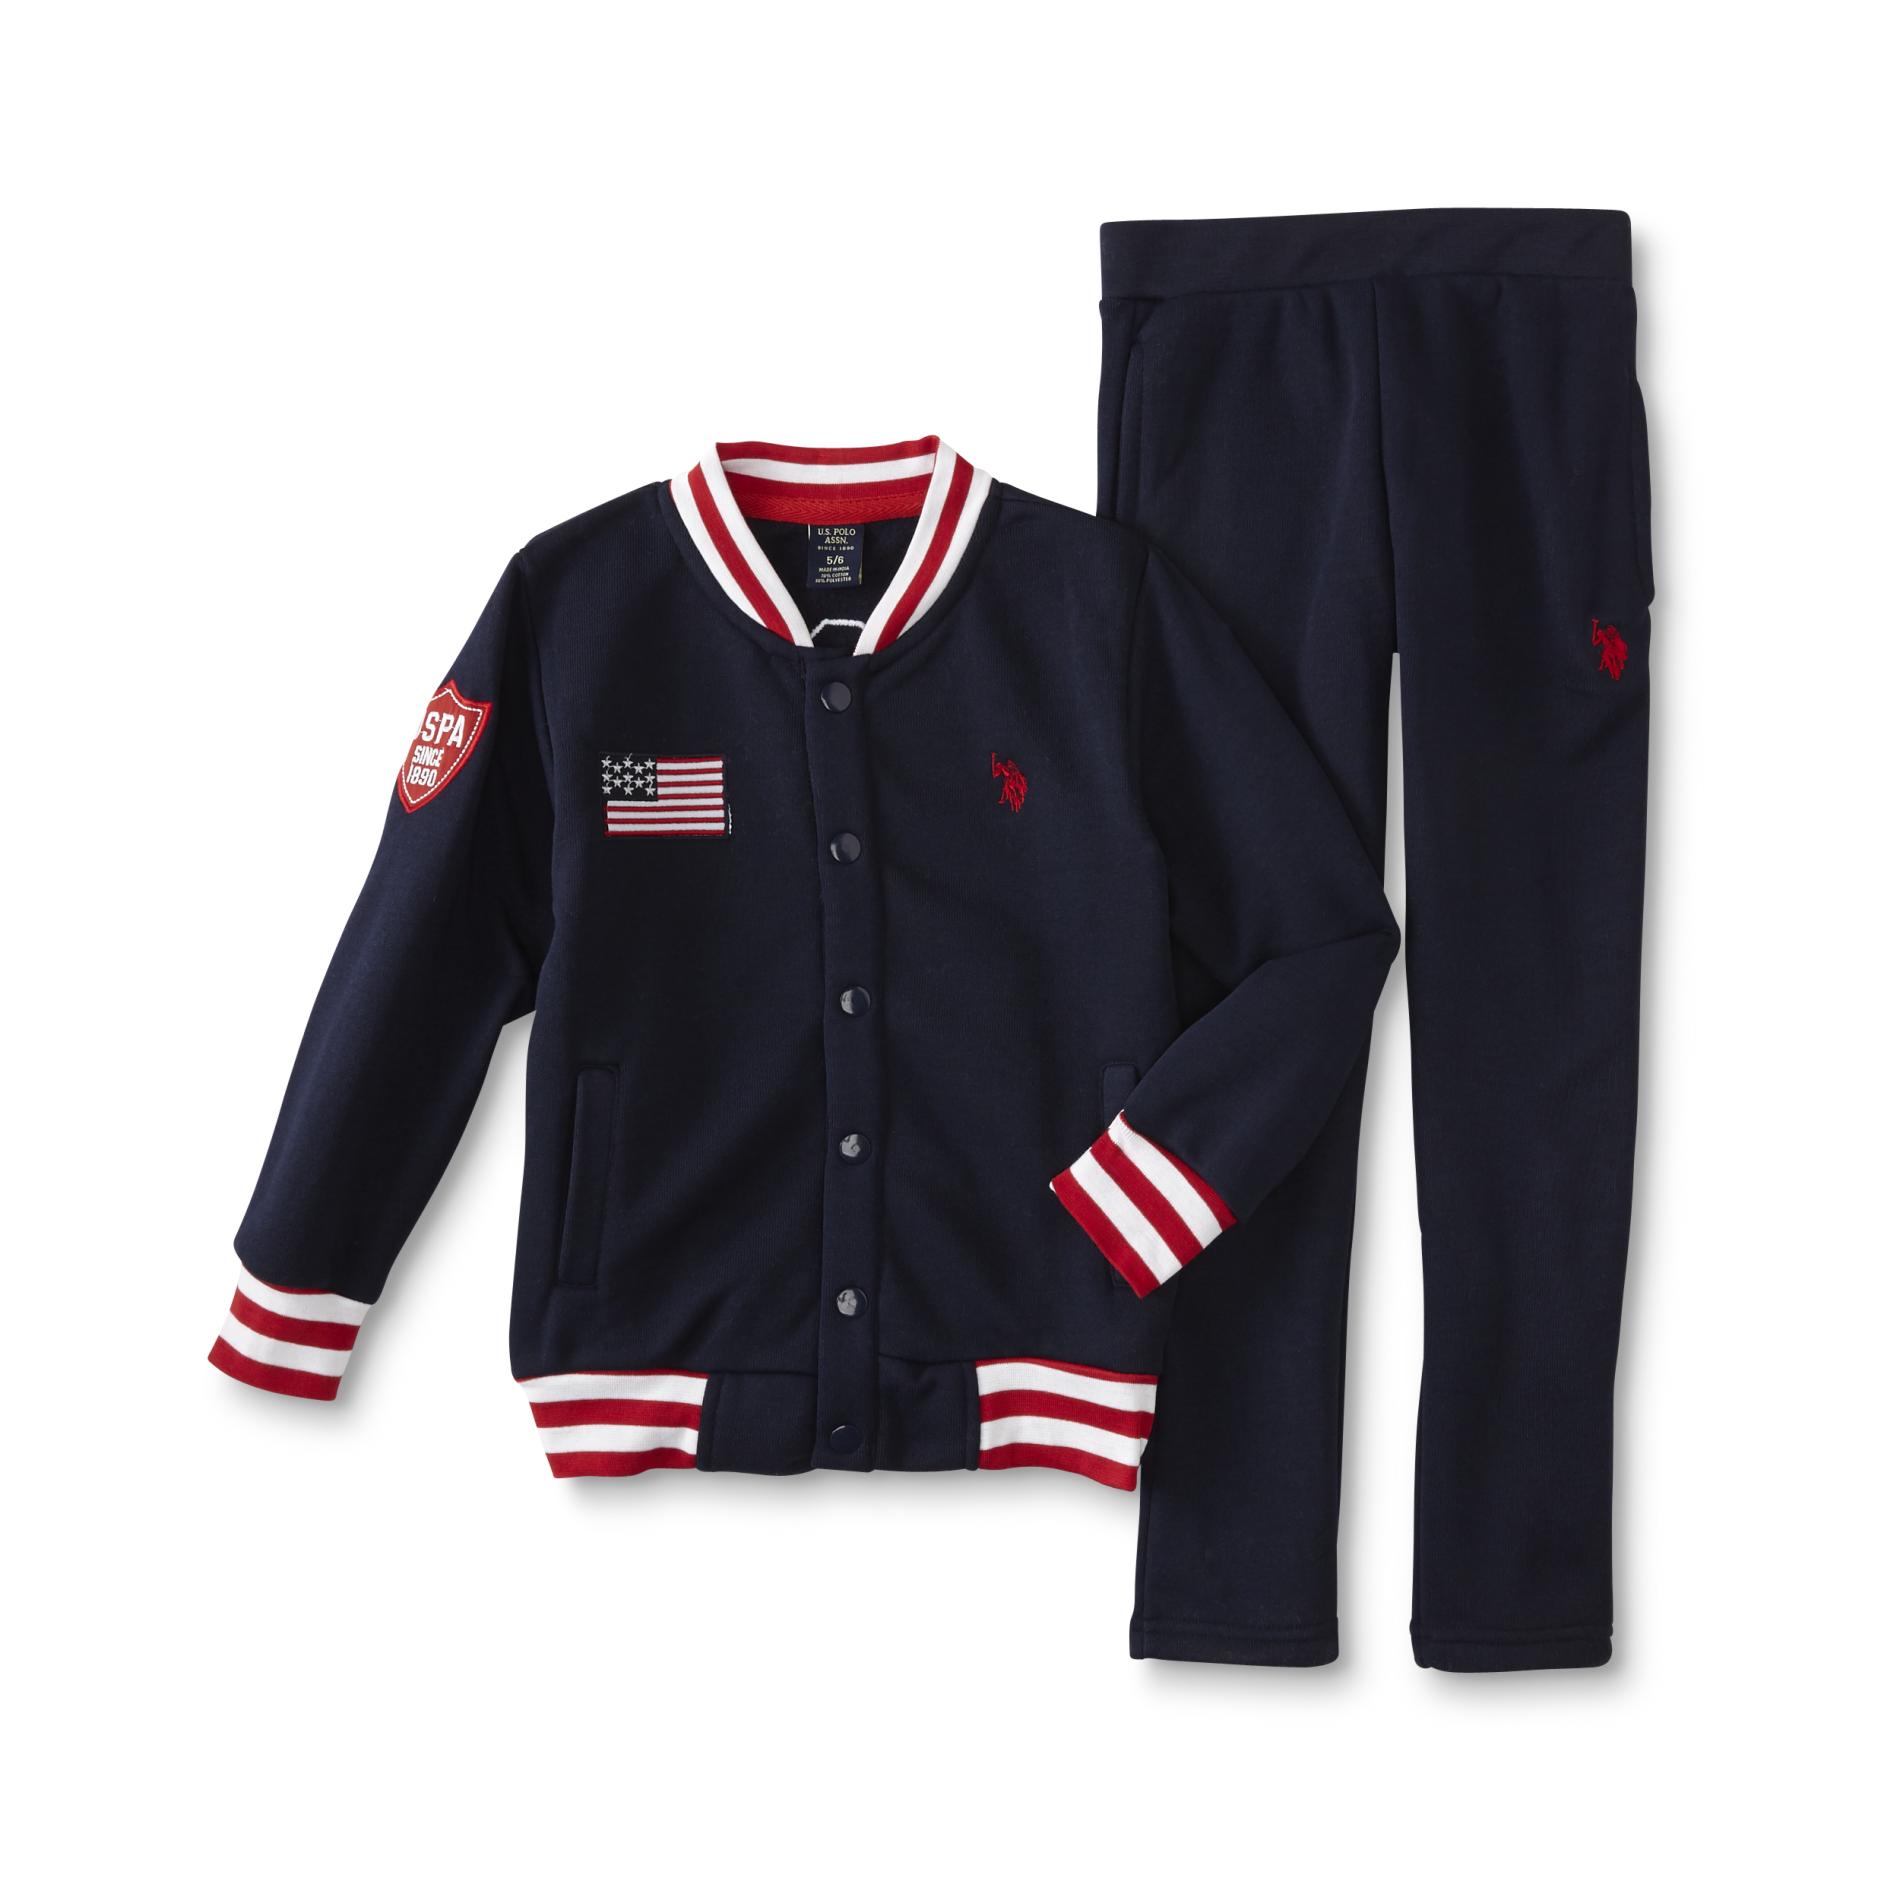 U.S. Polo Assn. Infant & Toddler Boys' Fleece Jacket & Pants